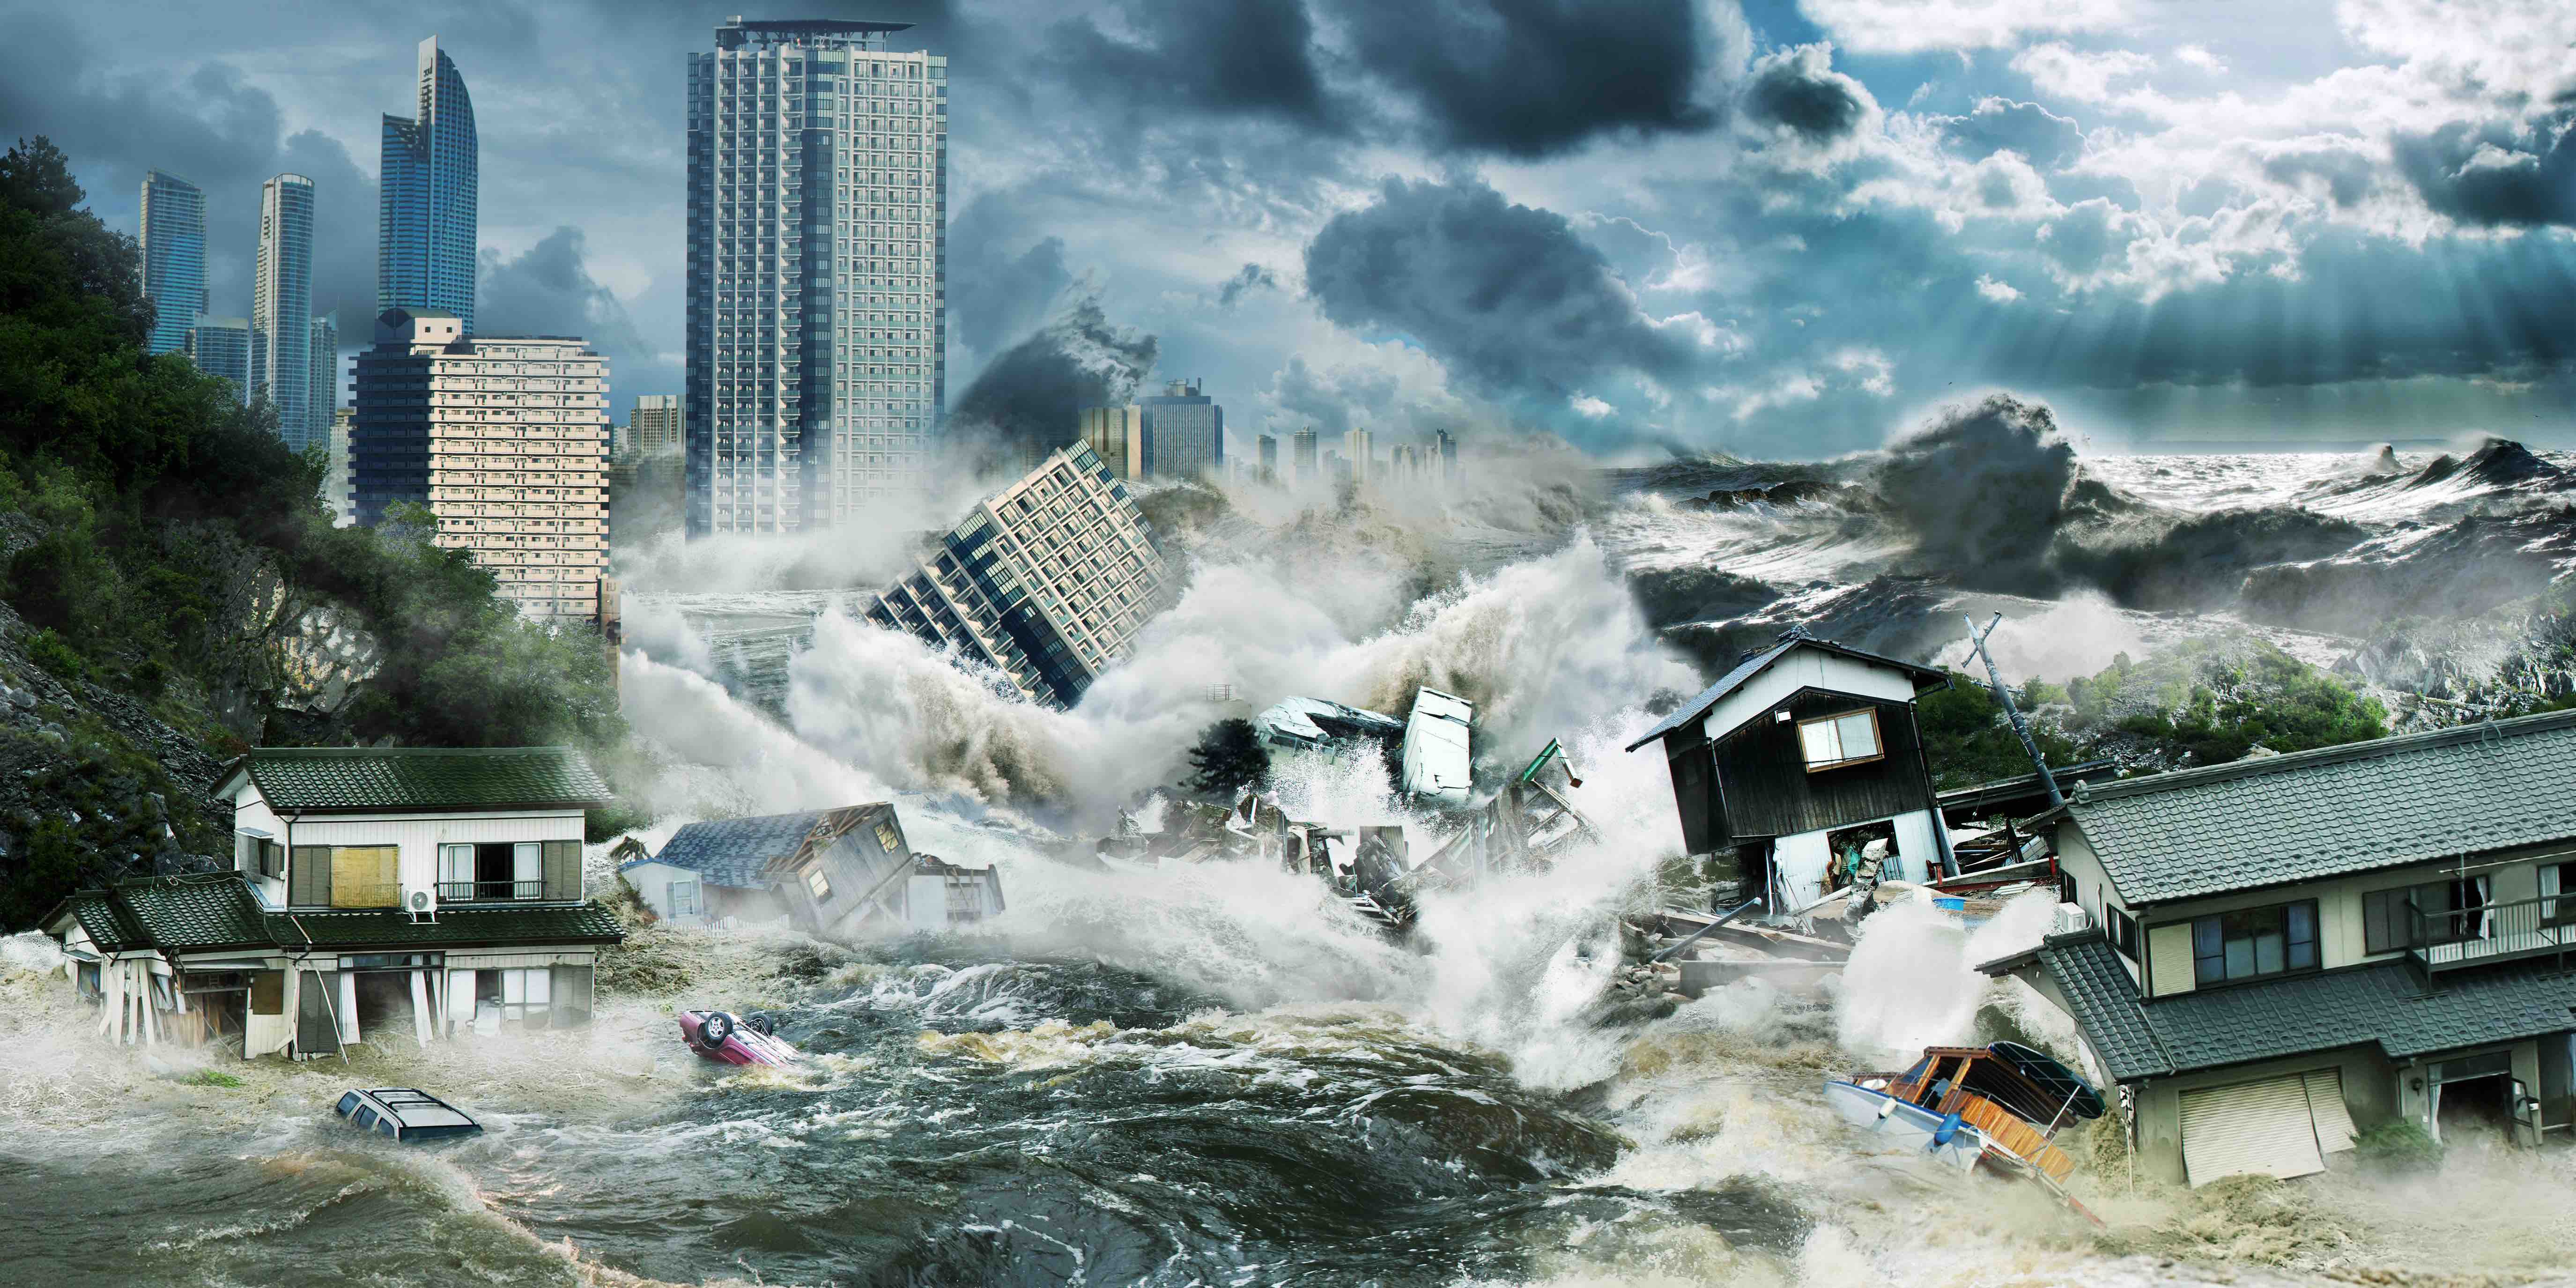 presentation of earthquake and tsunami